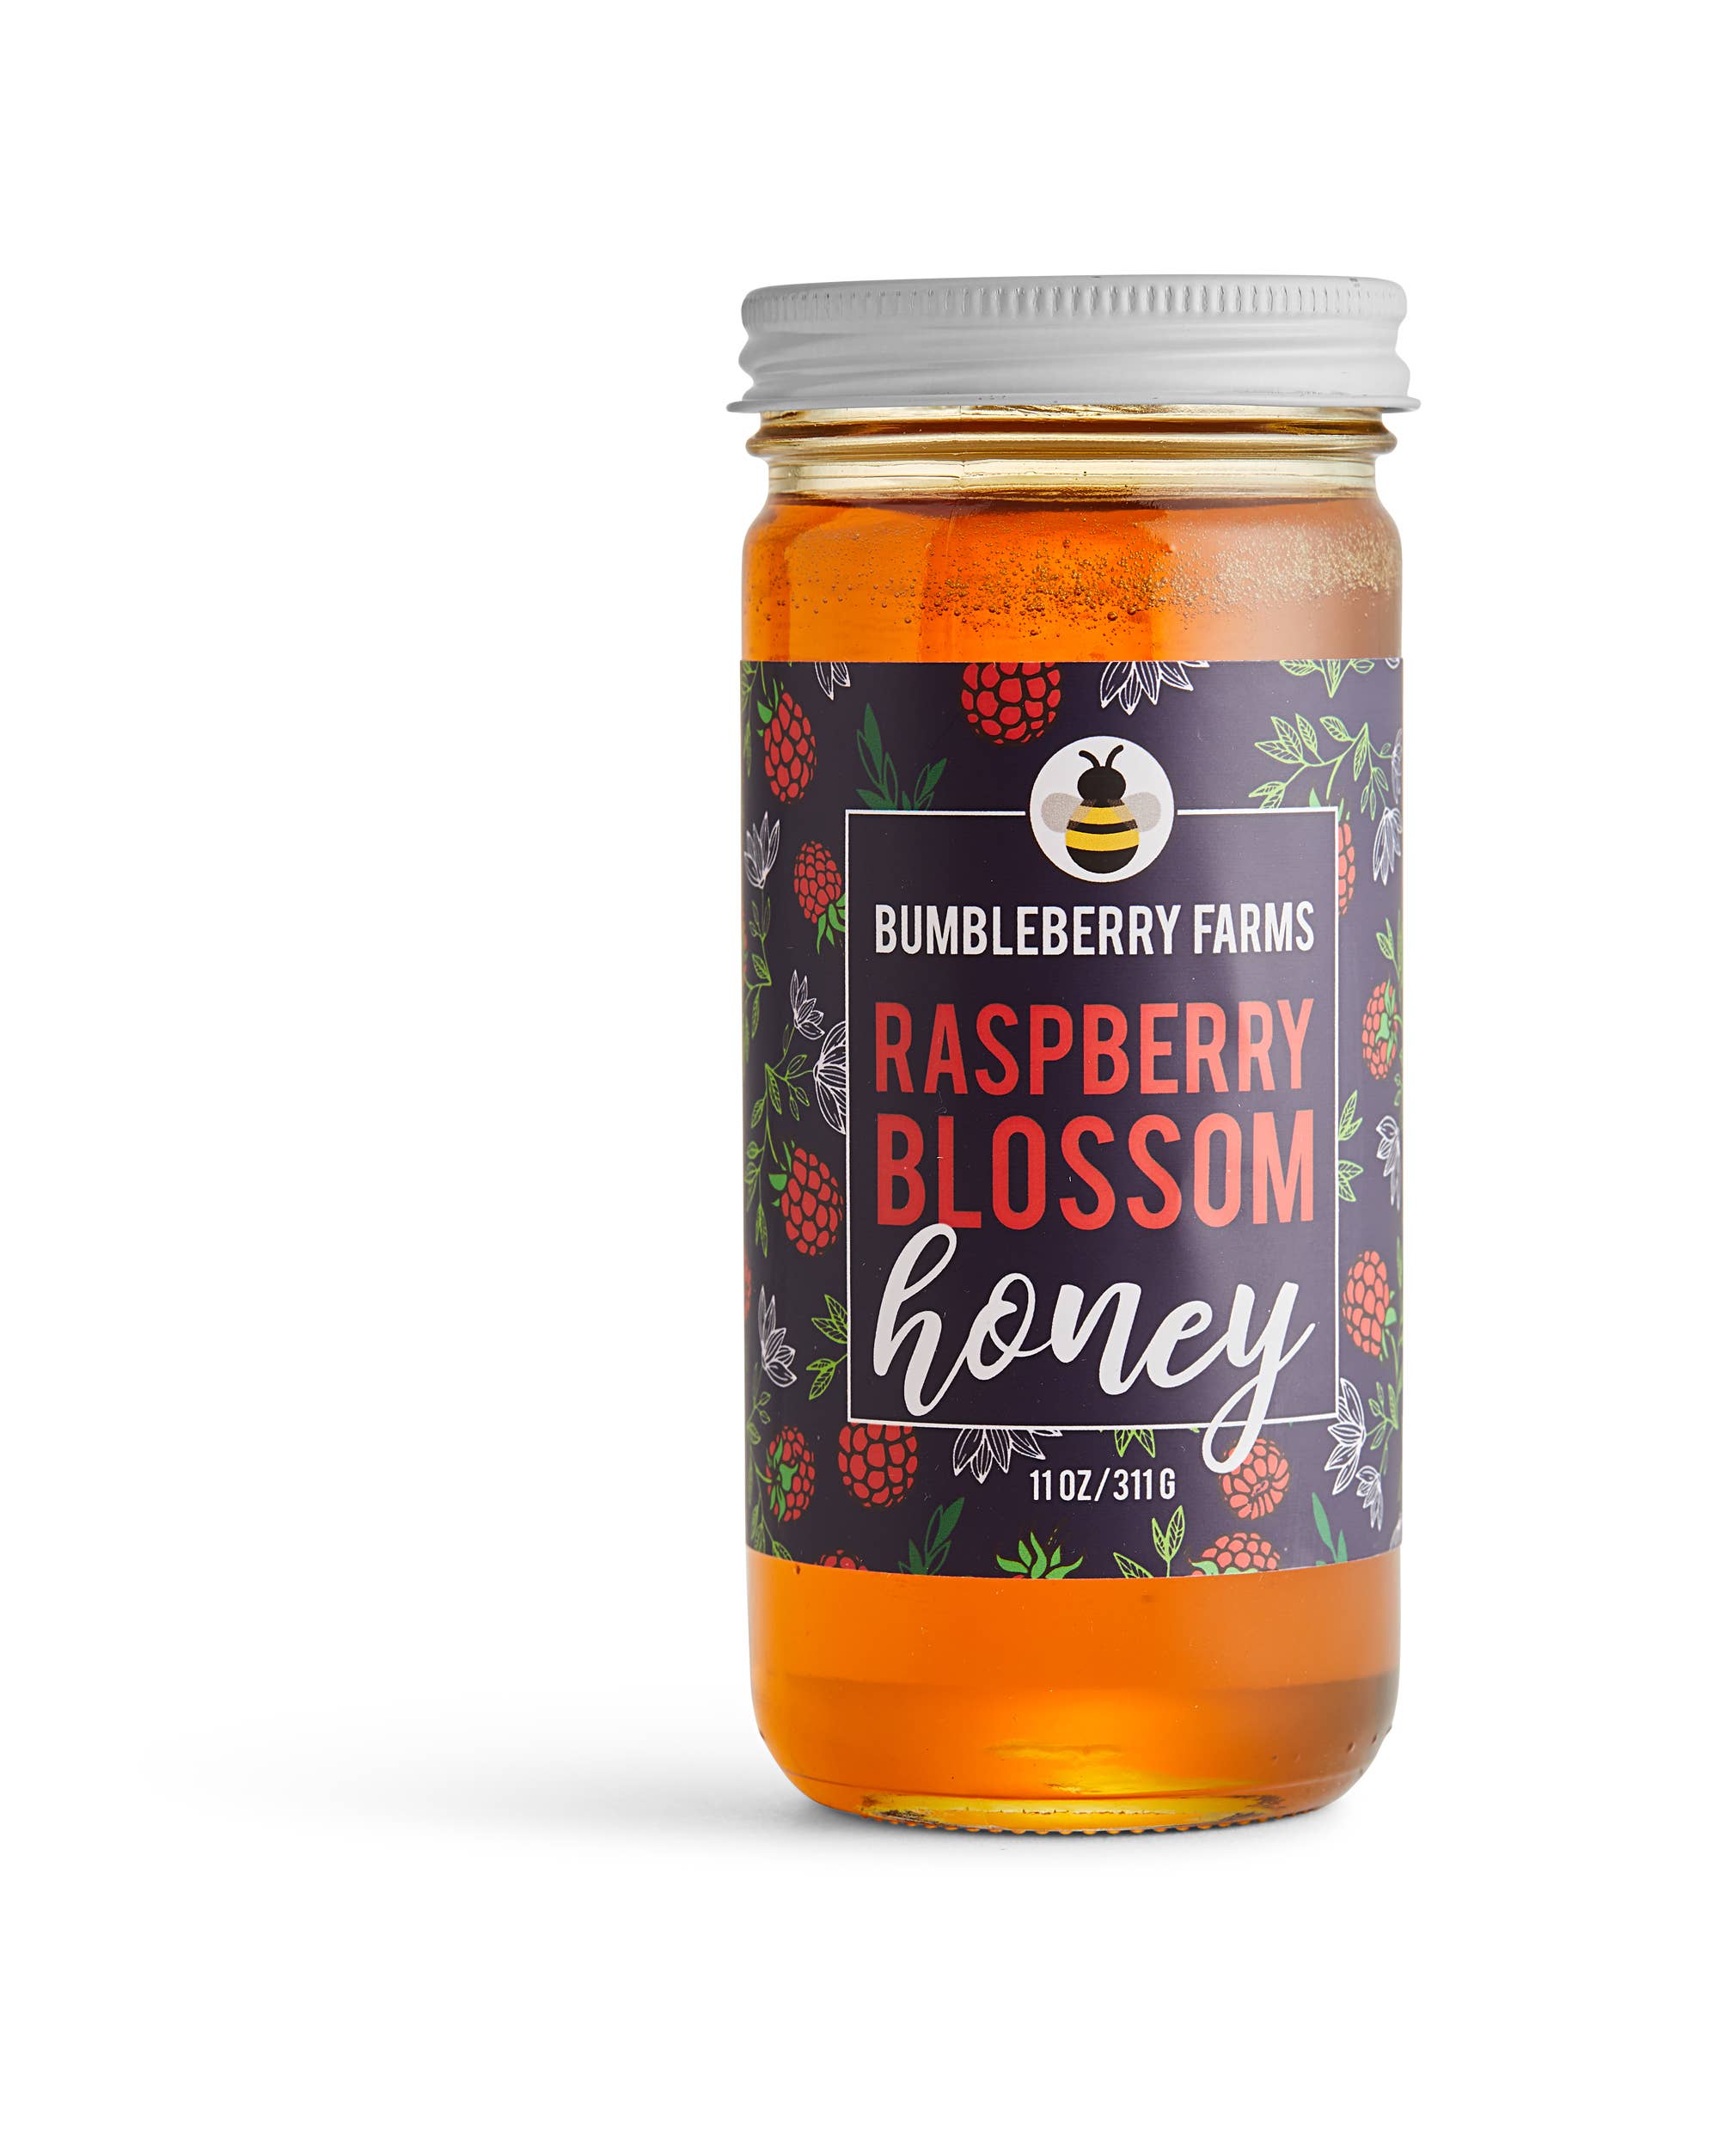 SALE! Bumbleberry Farms - Pure Raspberry Blossom Honey - 11OZ